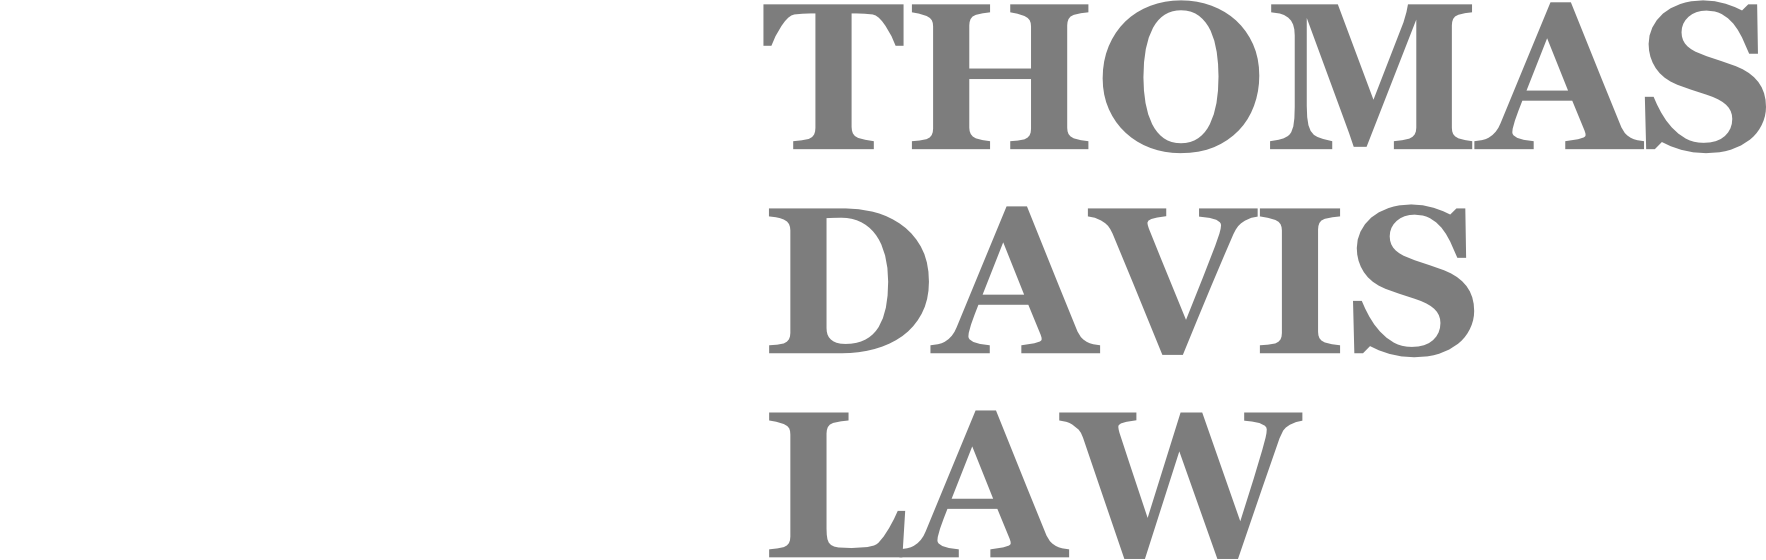 Thomas Davis Law Logo